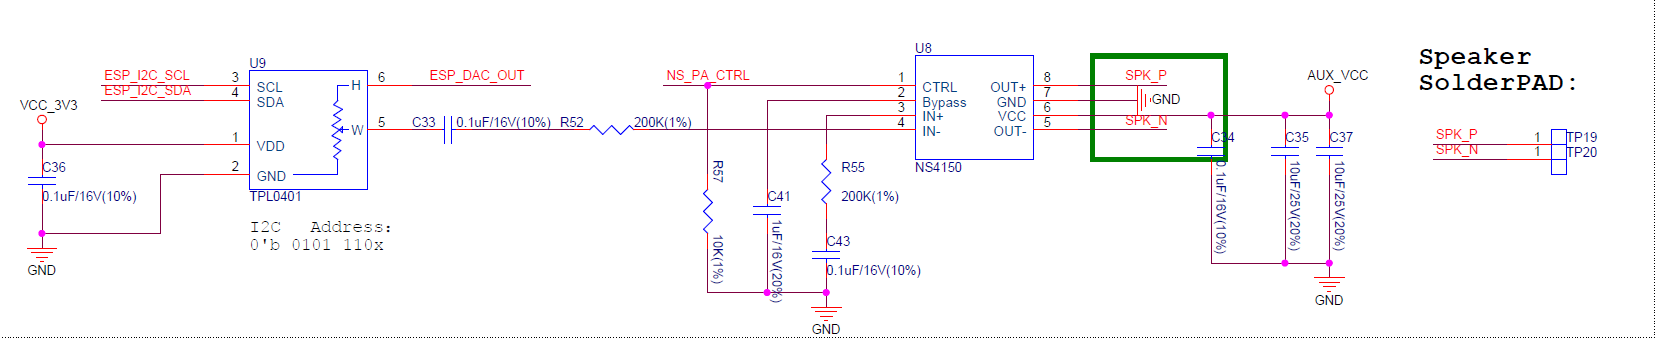 ESP32-S2-HMI-DevKit-1 audio playback schematic (click to enlarge)